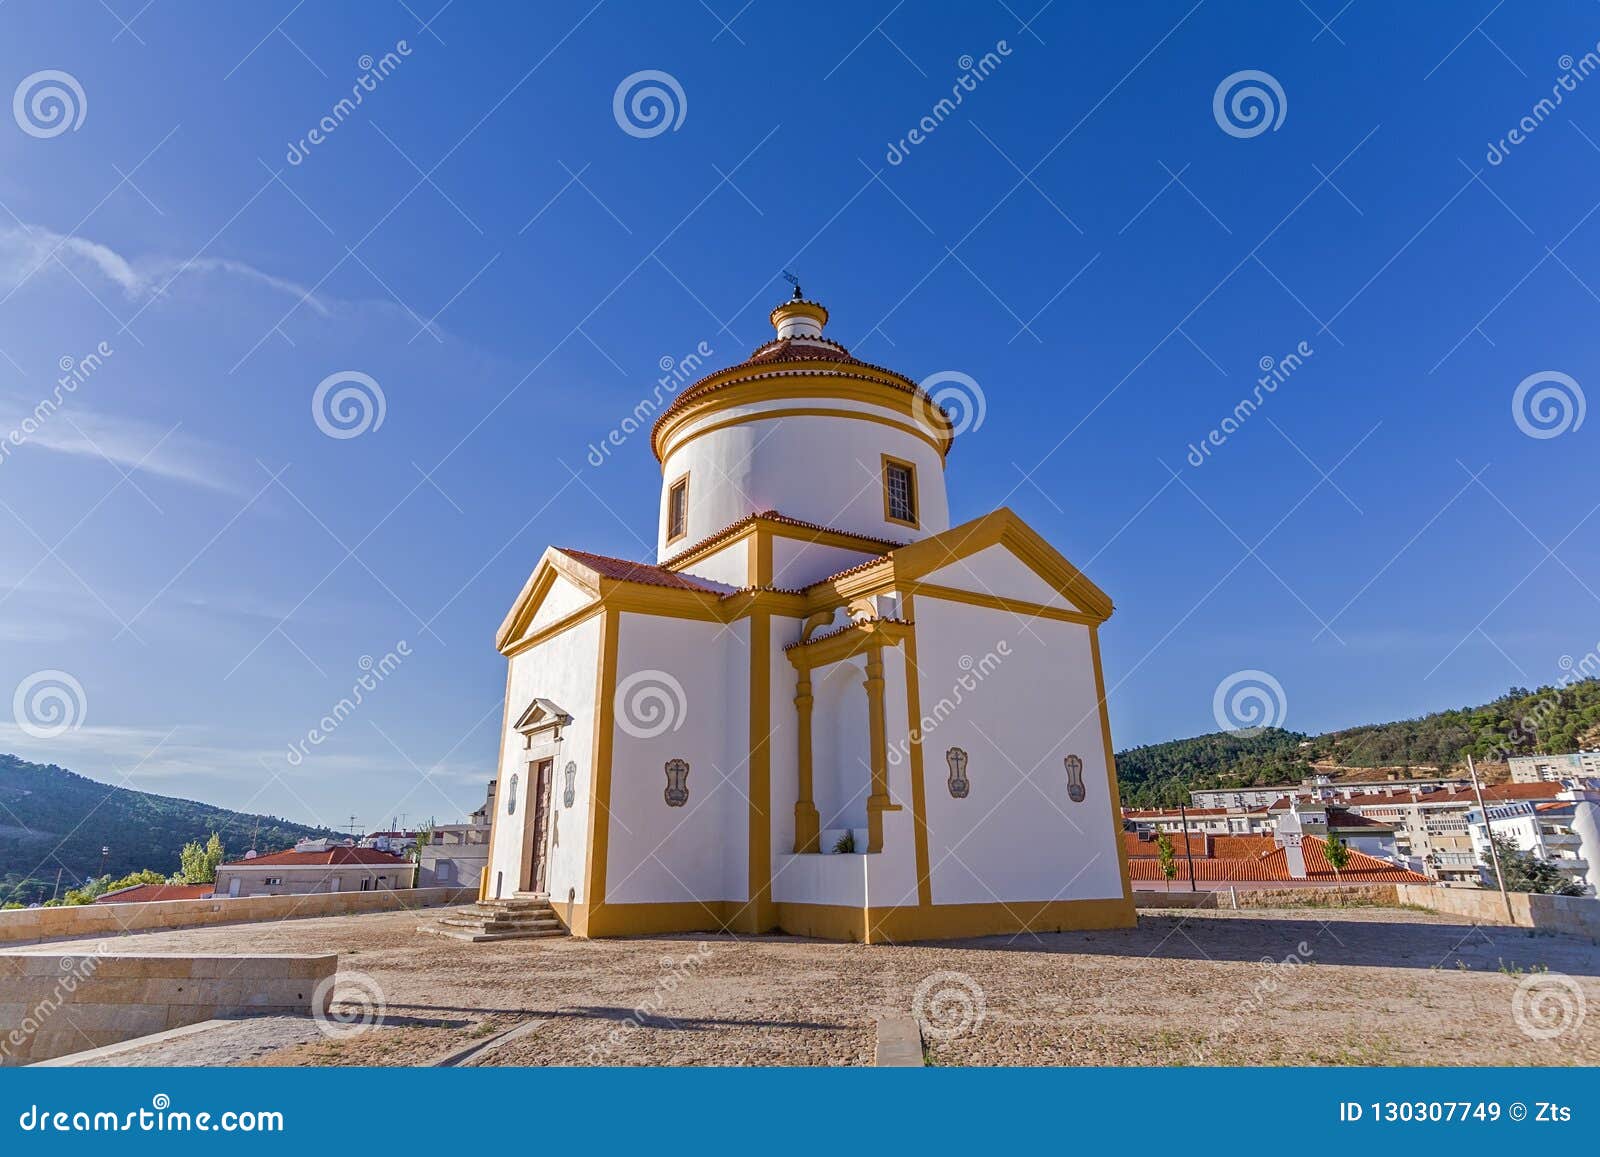 igreja or capela do calvario church in the city of portalegre